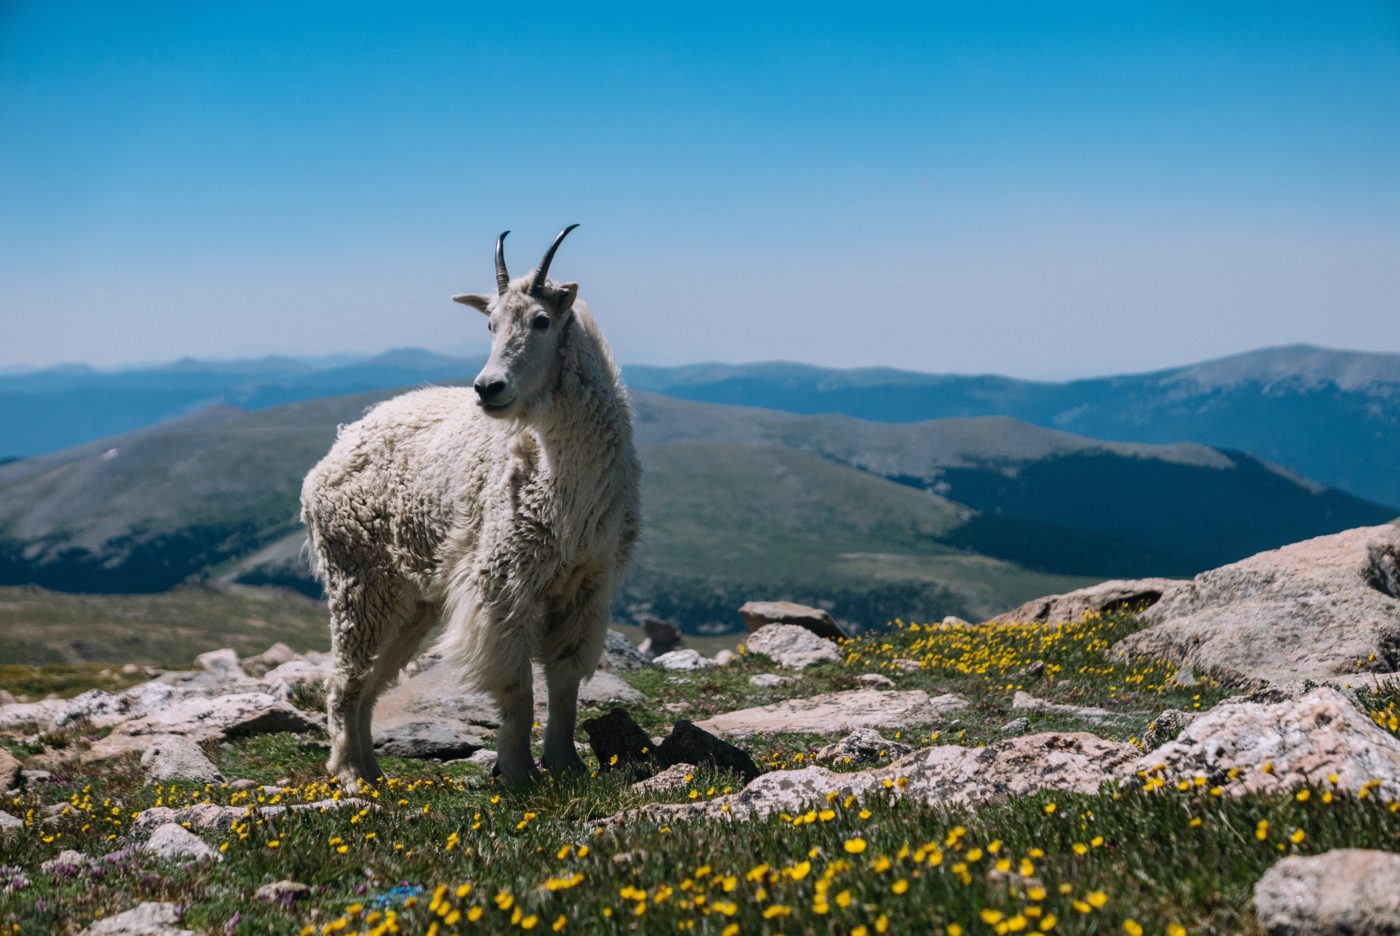 A mountain goat to represent Capricorn